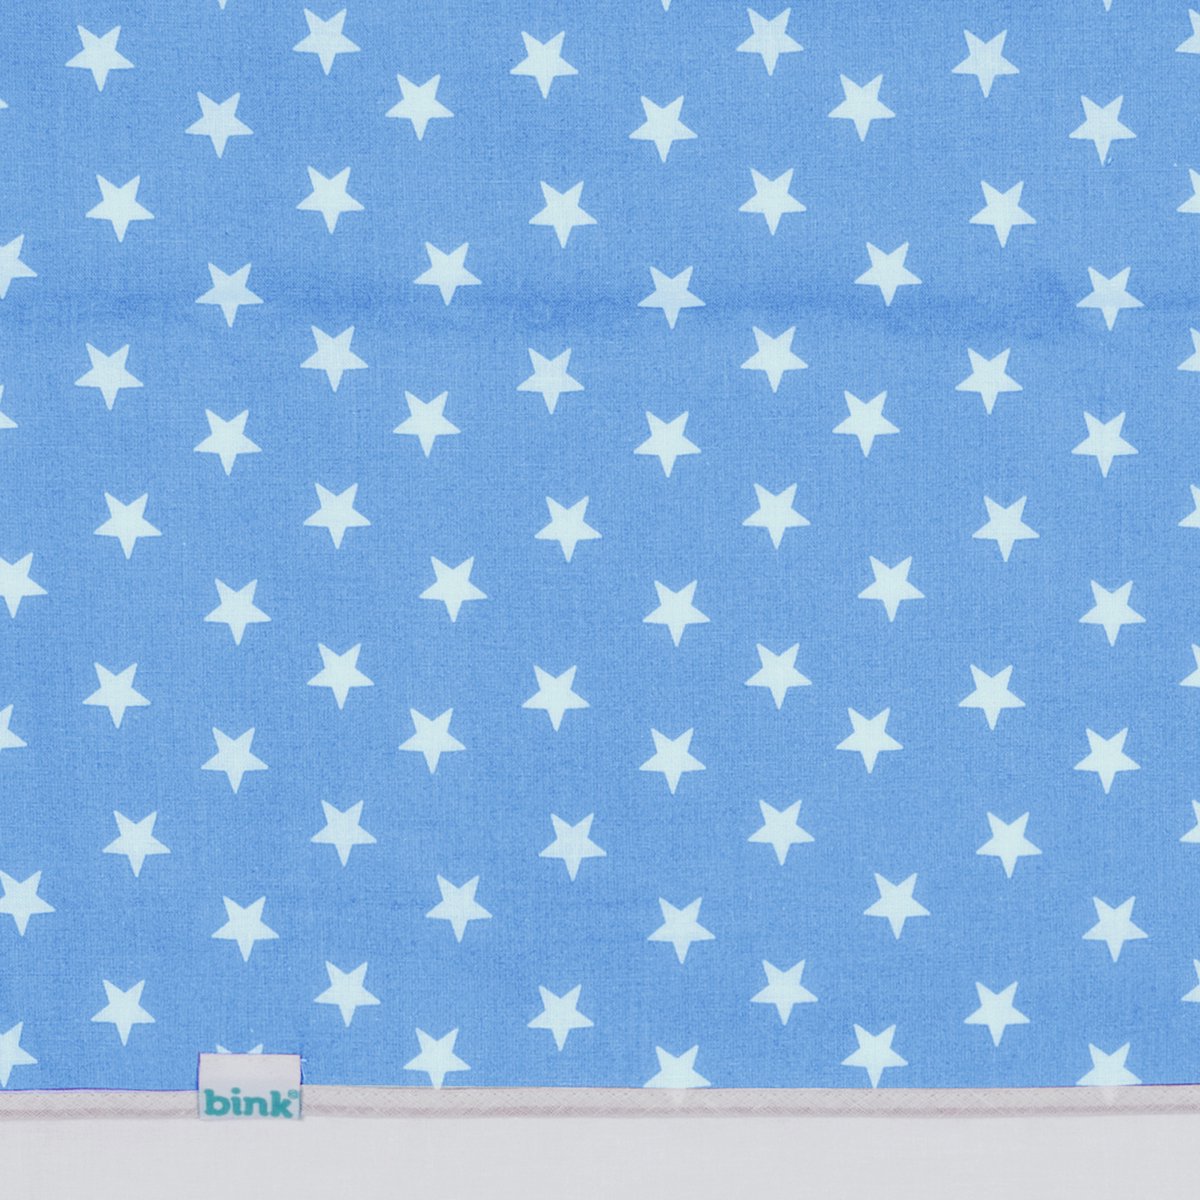 BINK Bedding Ledikantlaken Stars Blue 100 x 150 cm - BINK Bedding